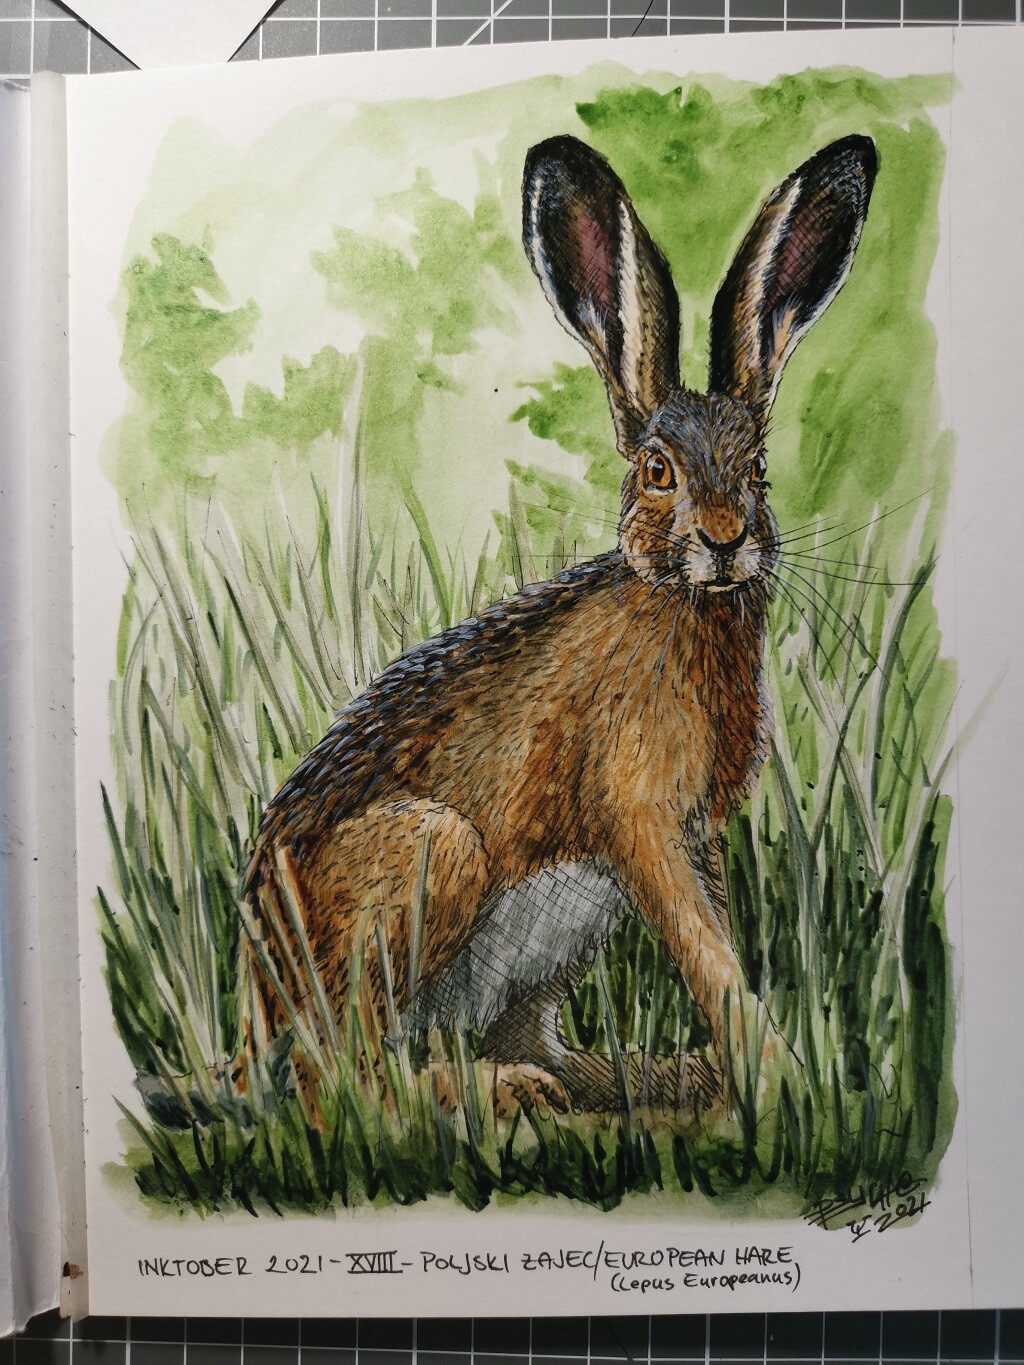 Poljski Zajec/European Hare (Lepus Europaeus)